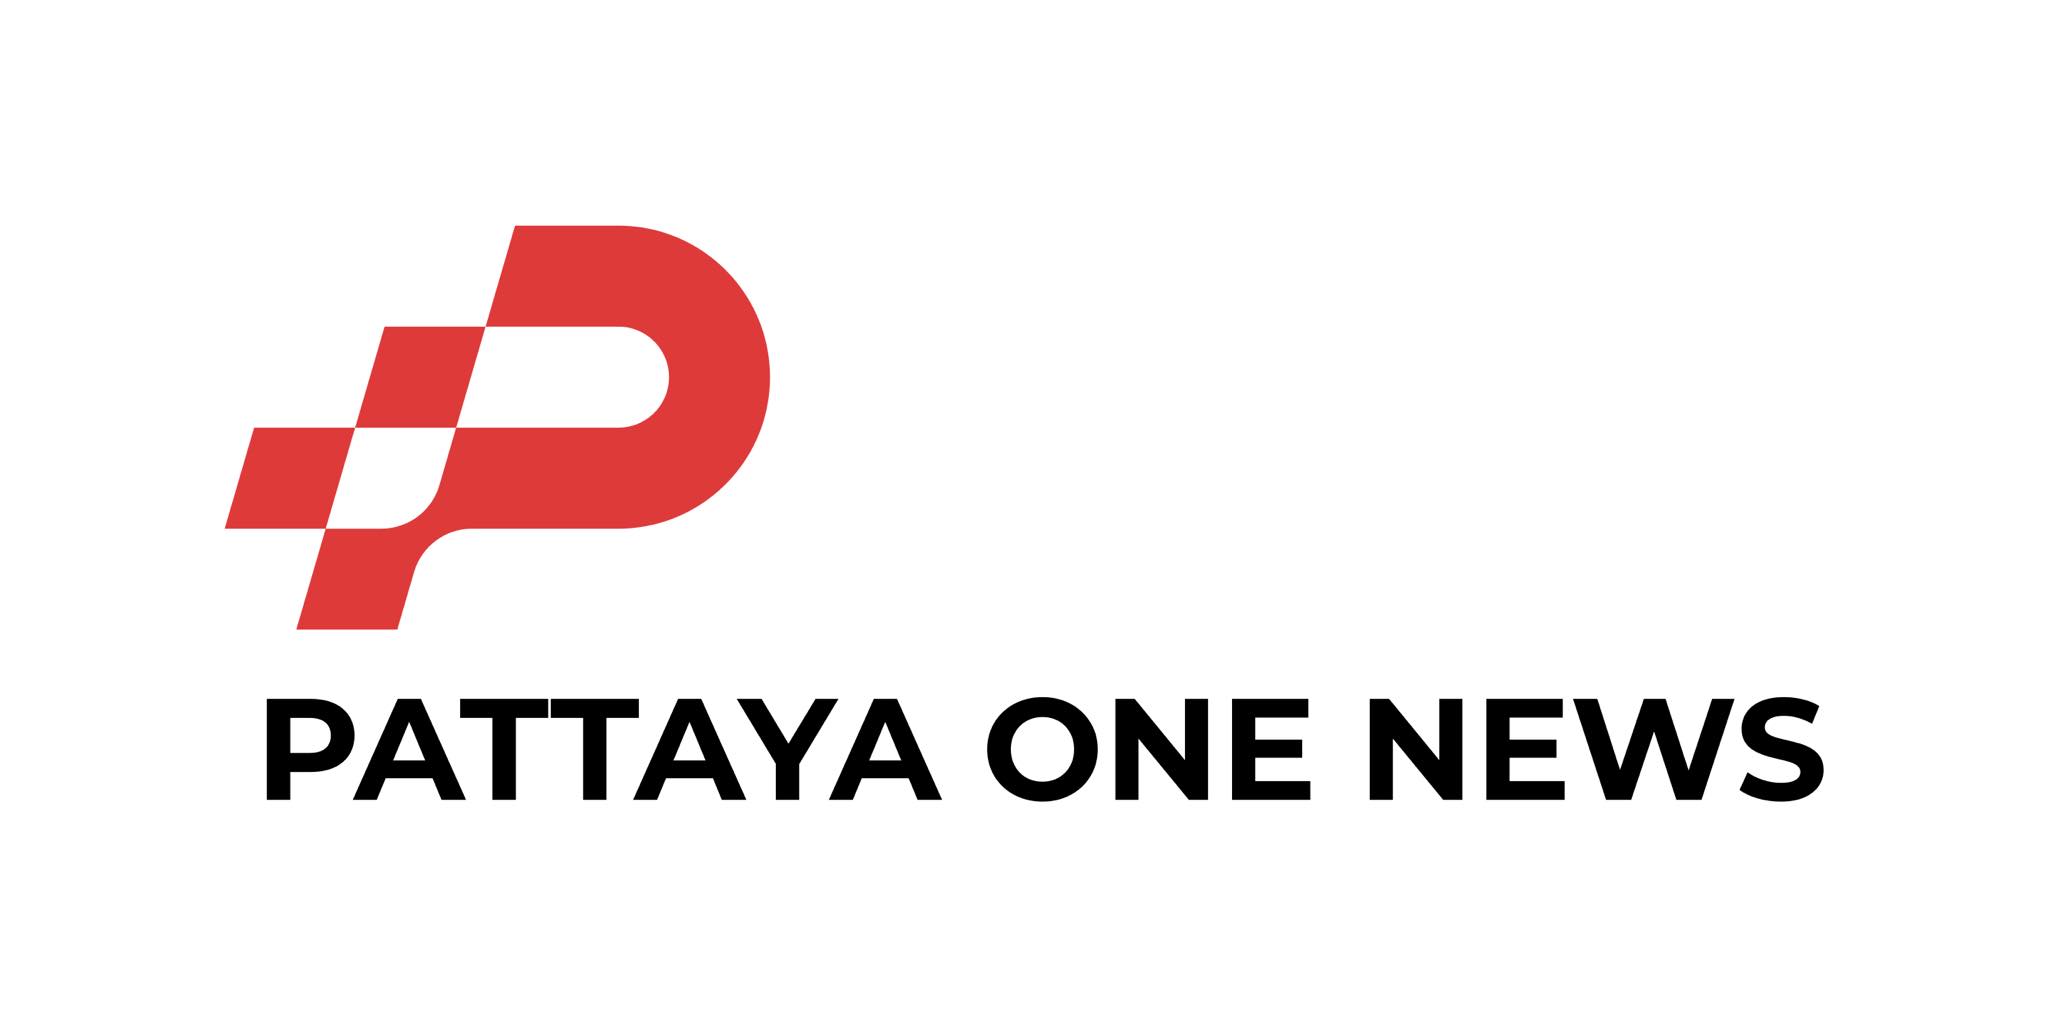 Pattaya news